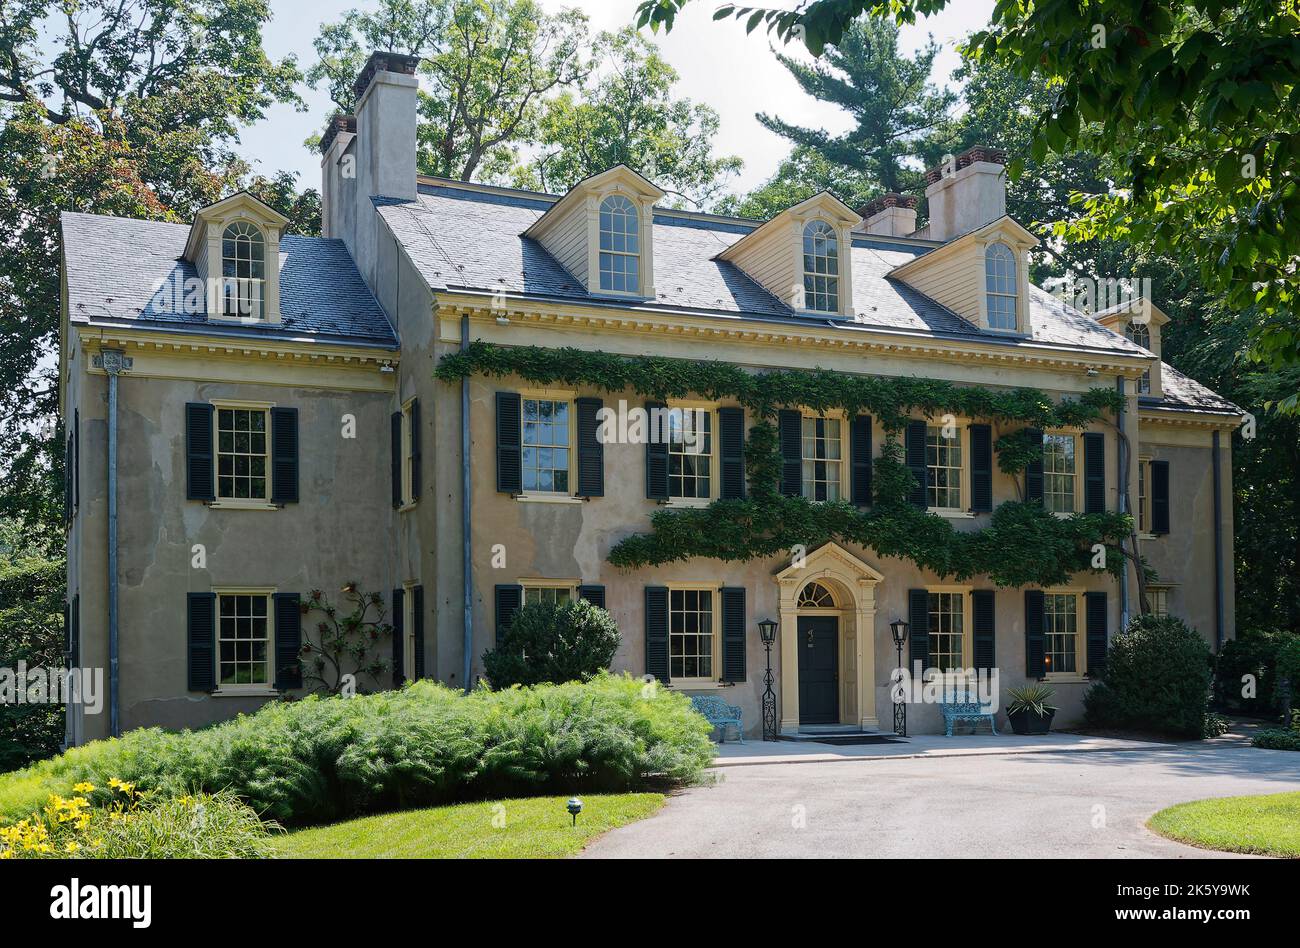 E. I. DuPont residence, home, Georgian style, 1803, antique building, stucco, black shutters, symmetrical, dormer windows, Hagley Museum, Delaware, US Stock Photo